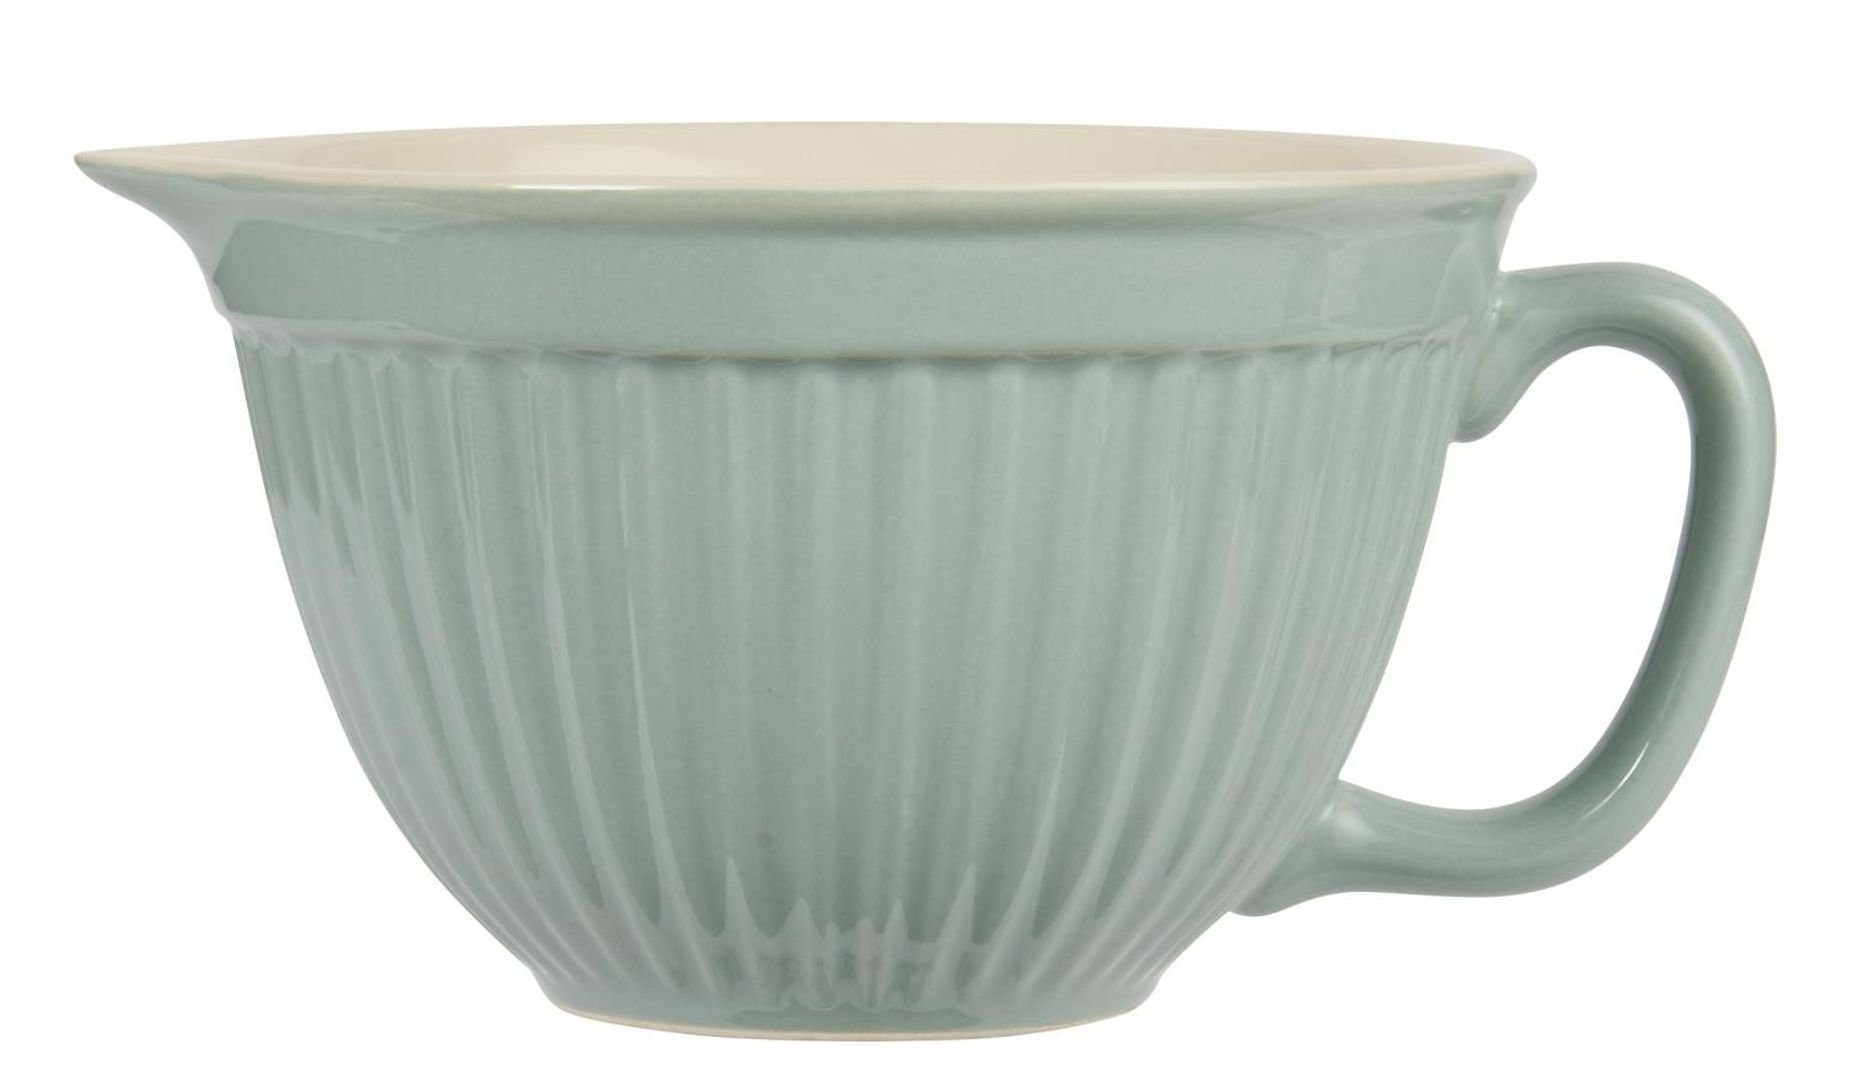 Laursen Keramik Farbauswahl Mynte Ib Laursen Tea Keramik (2075) - Schüssel, Green Rührschüssel 1,5l Rührschüssel